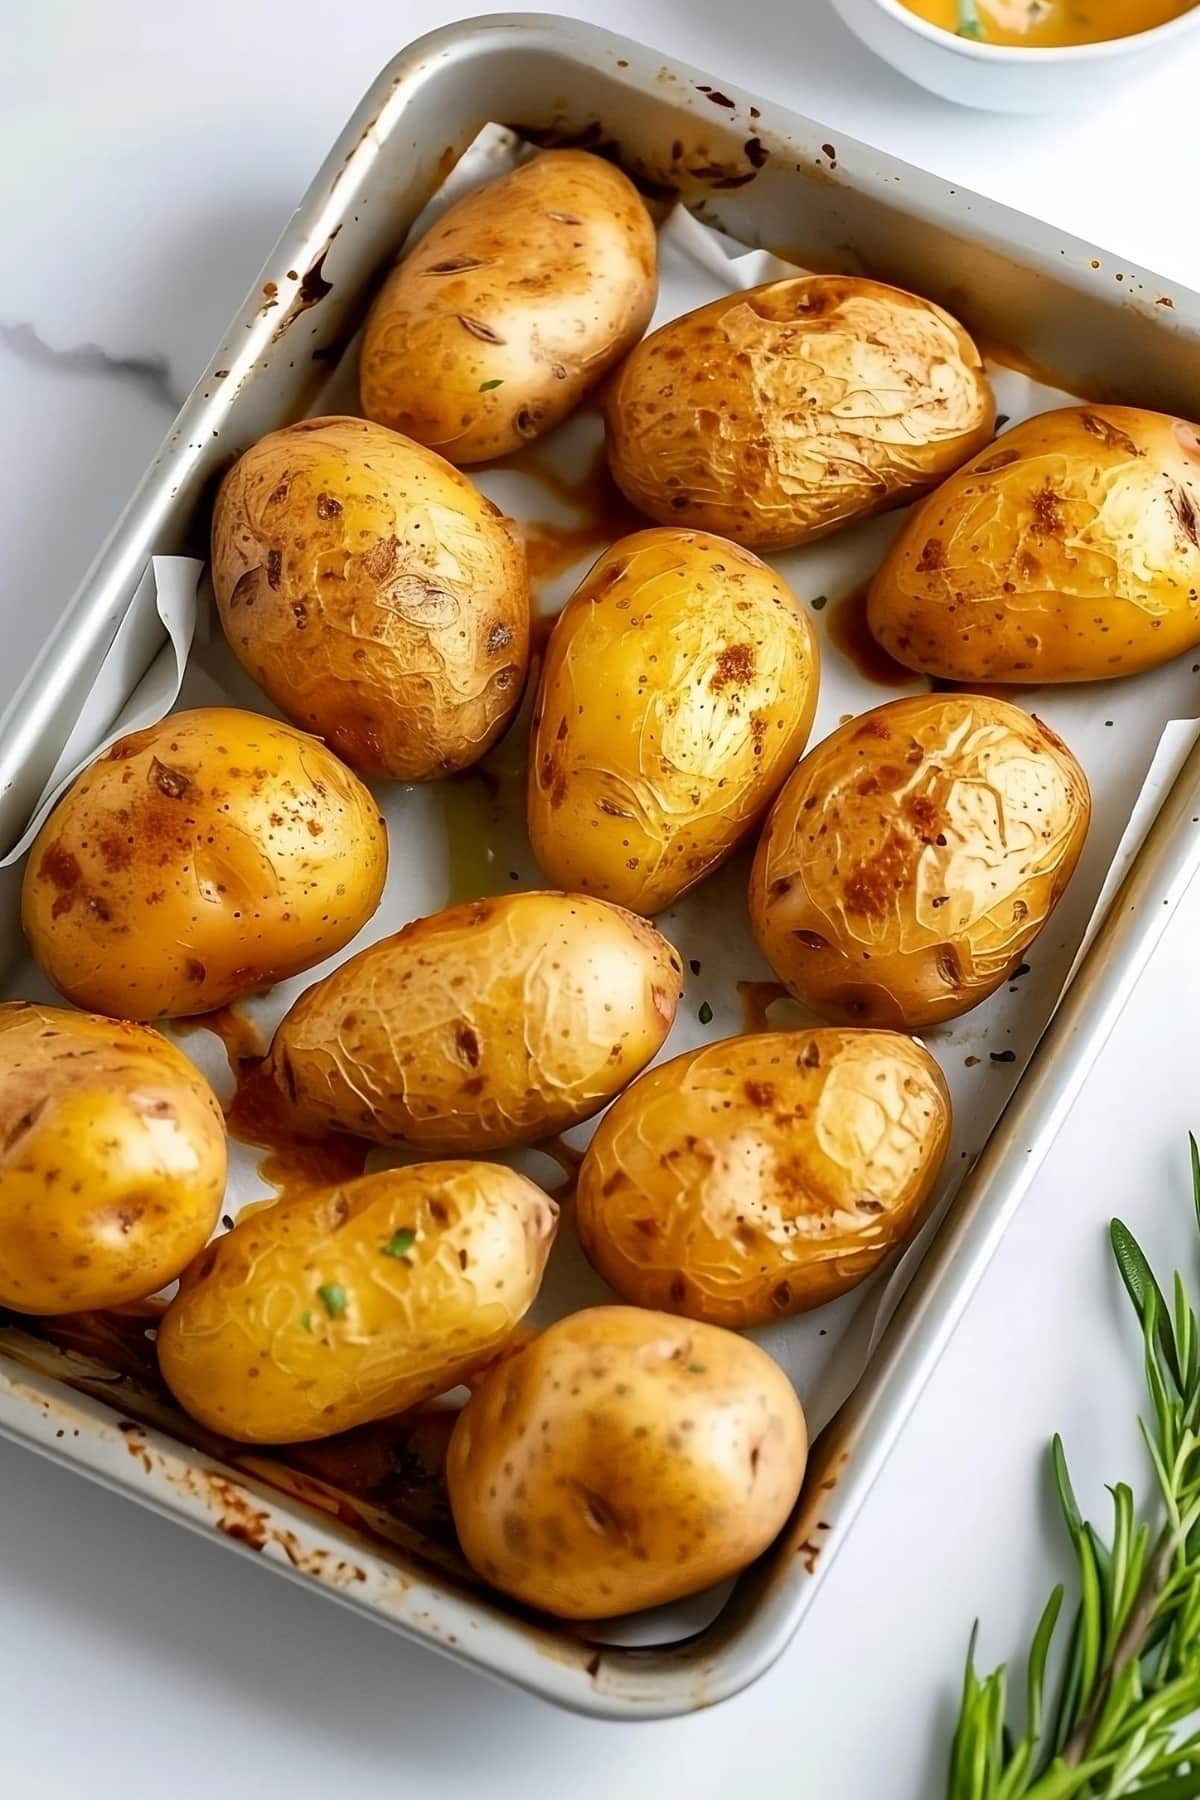 Baked potatoes in a baking sheet.